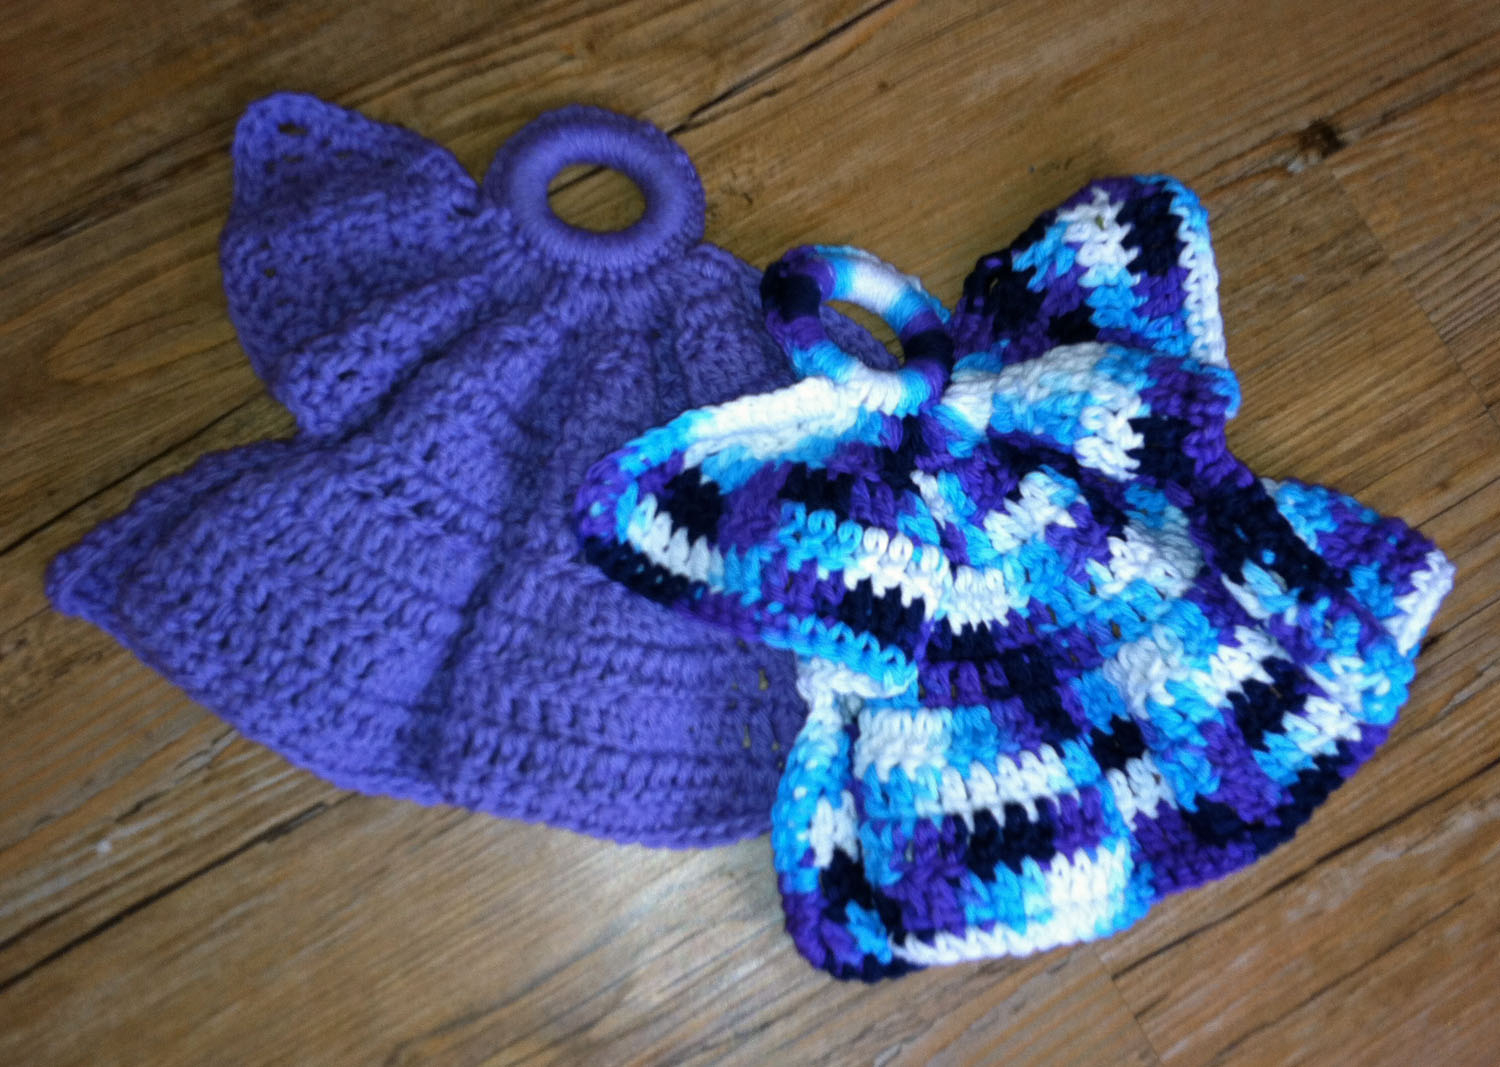 Crochet Dishcloth Free Pattern 34 New Crochet Dishcloth Patterns For Free Patterns Hub